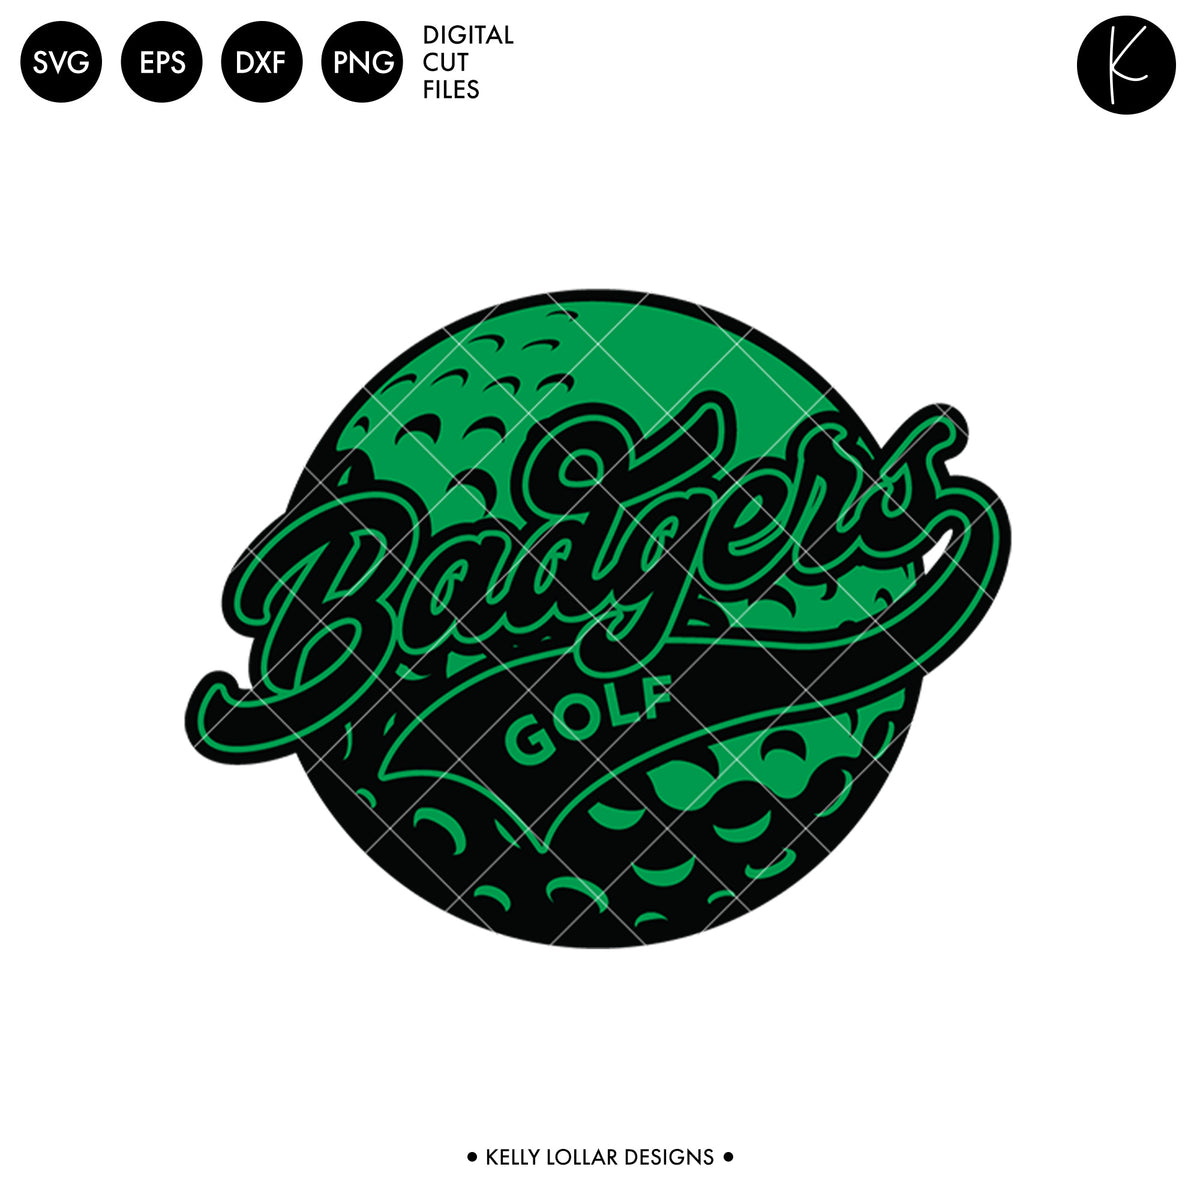 Badgers Golf Bundle | SVG DXF EPS PNG Cut Files